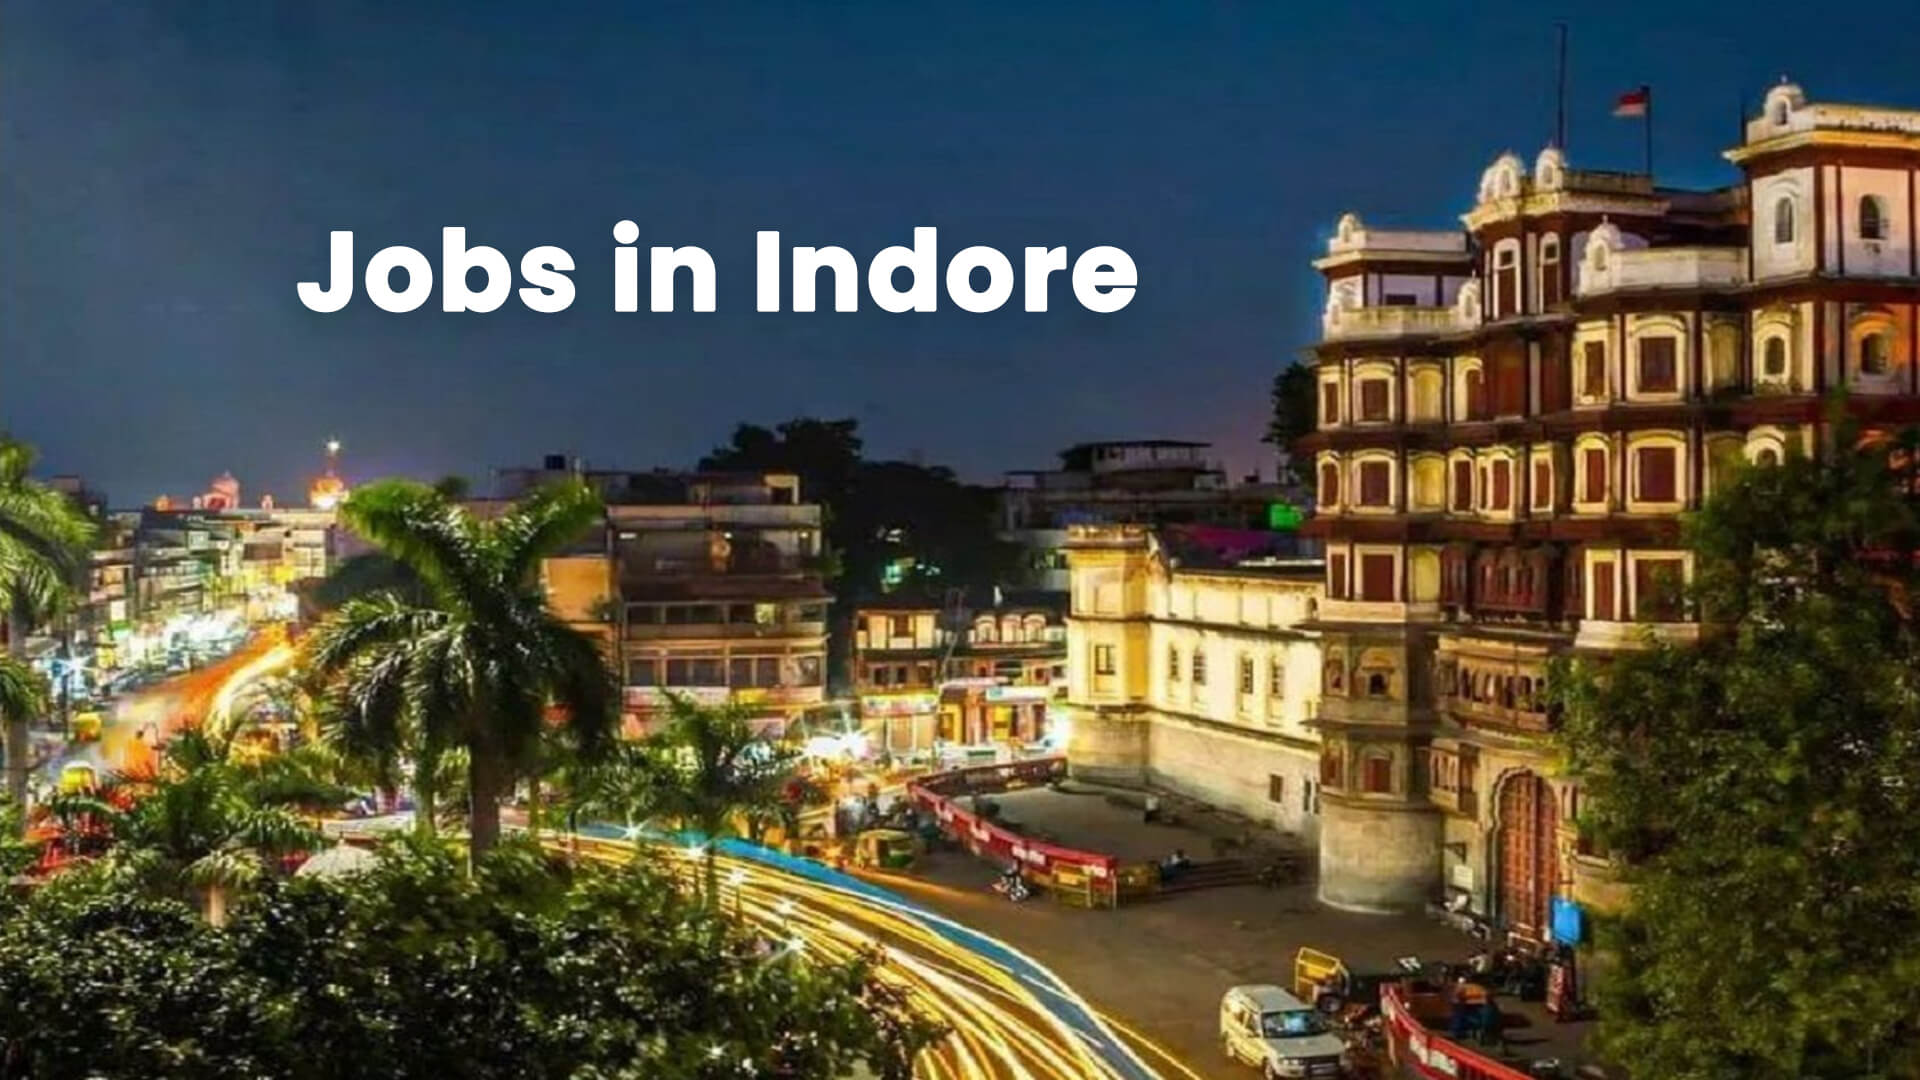 Jobs in Indore